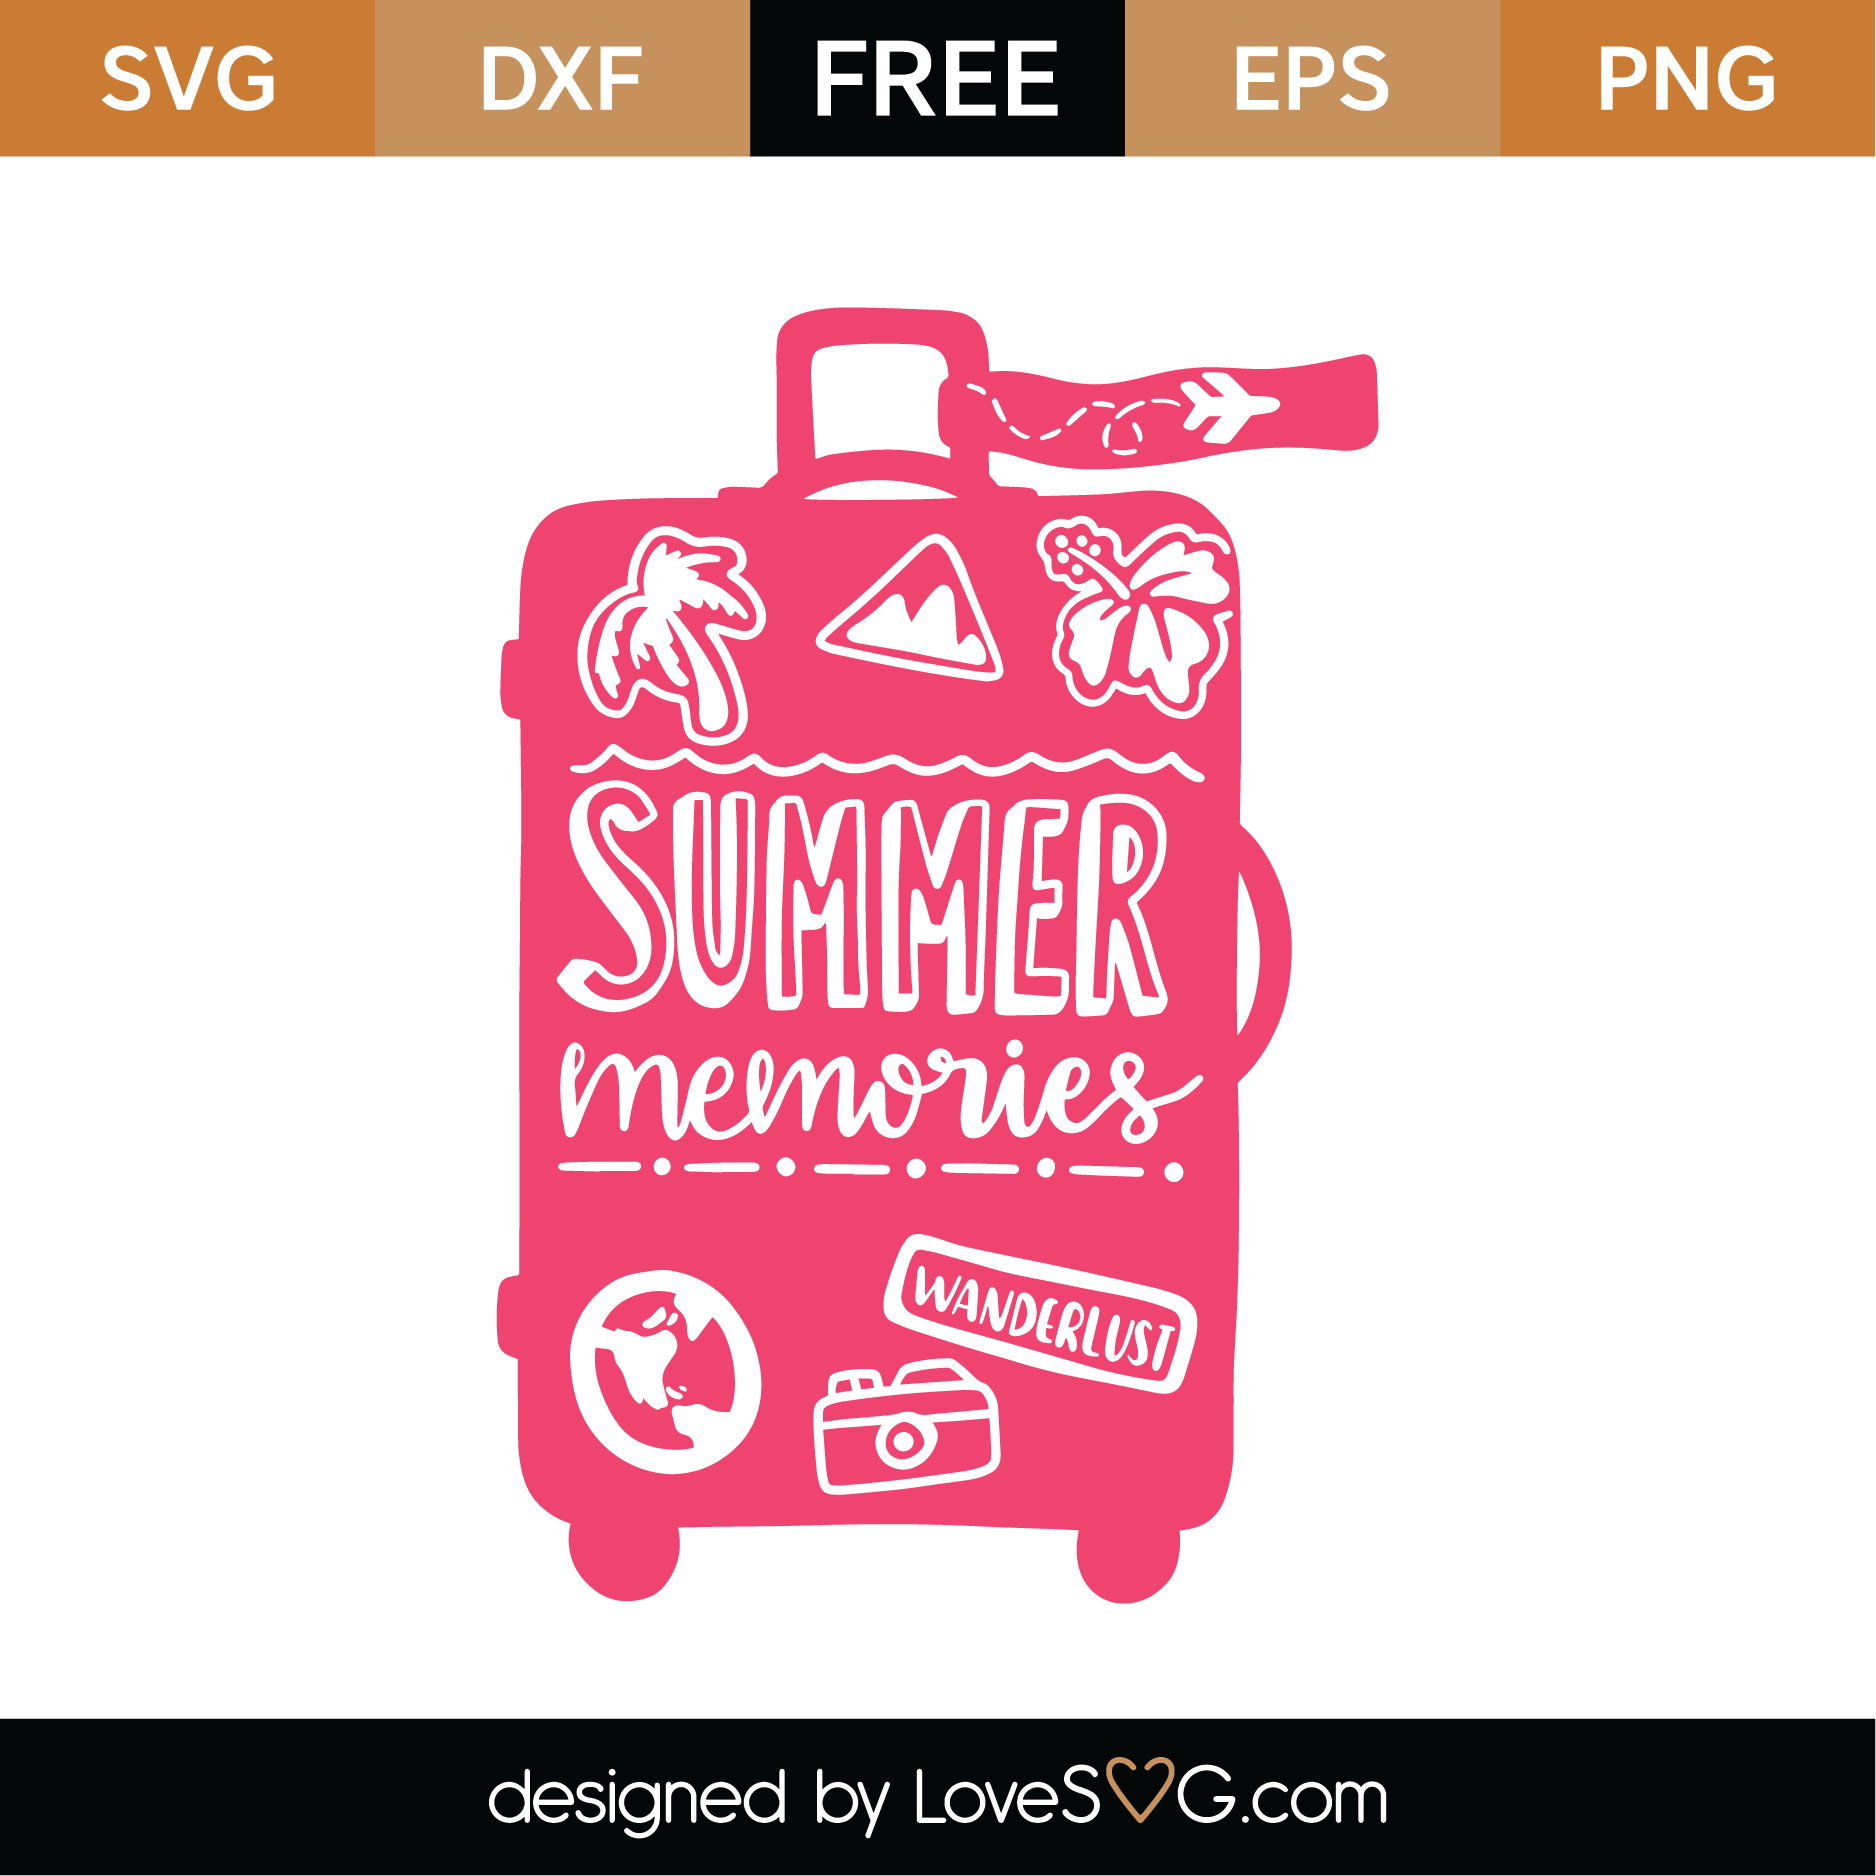 Download Free Summer Memories Luggage SVG Cut File | Lovesvg.com